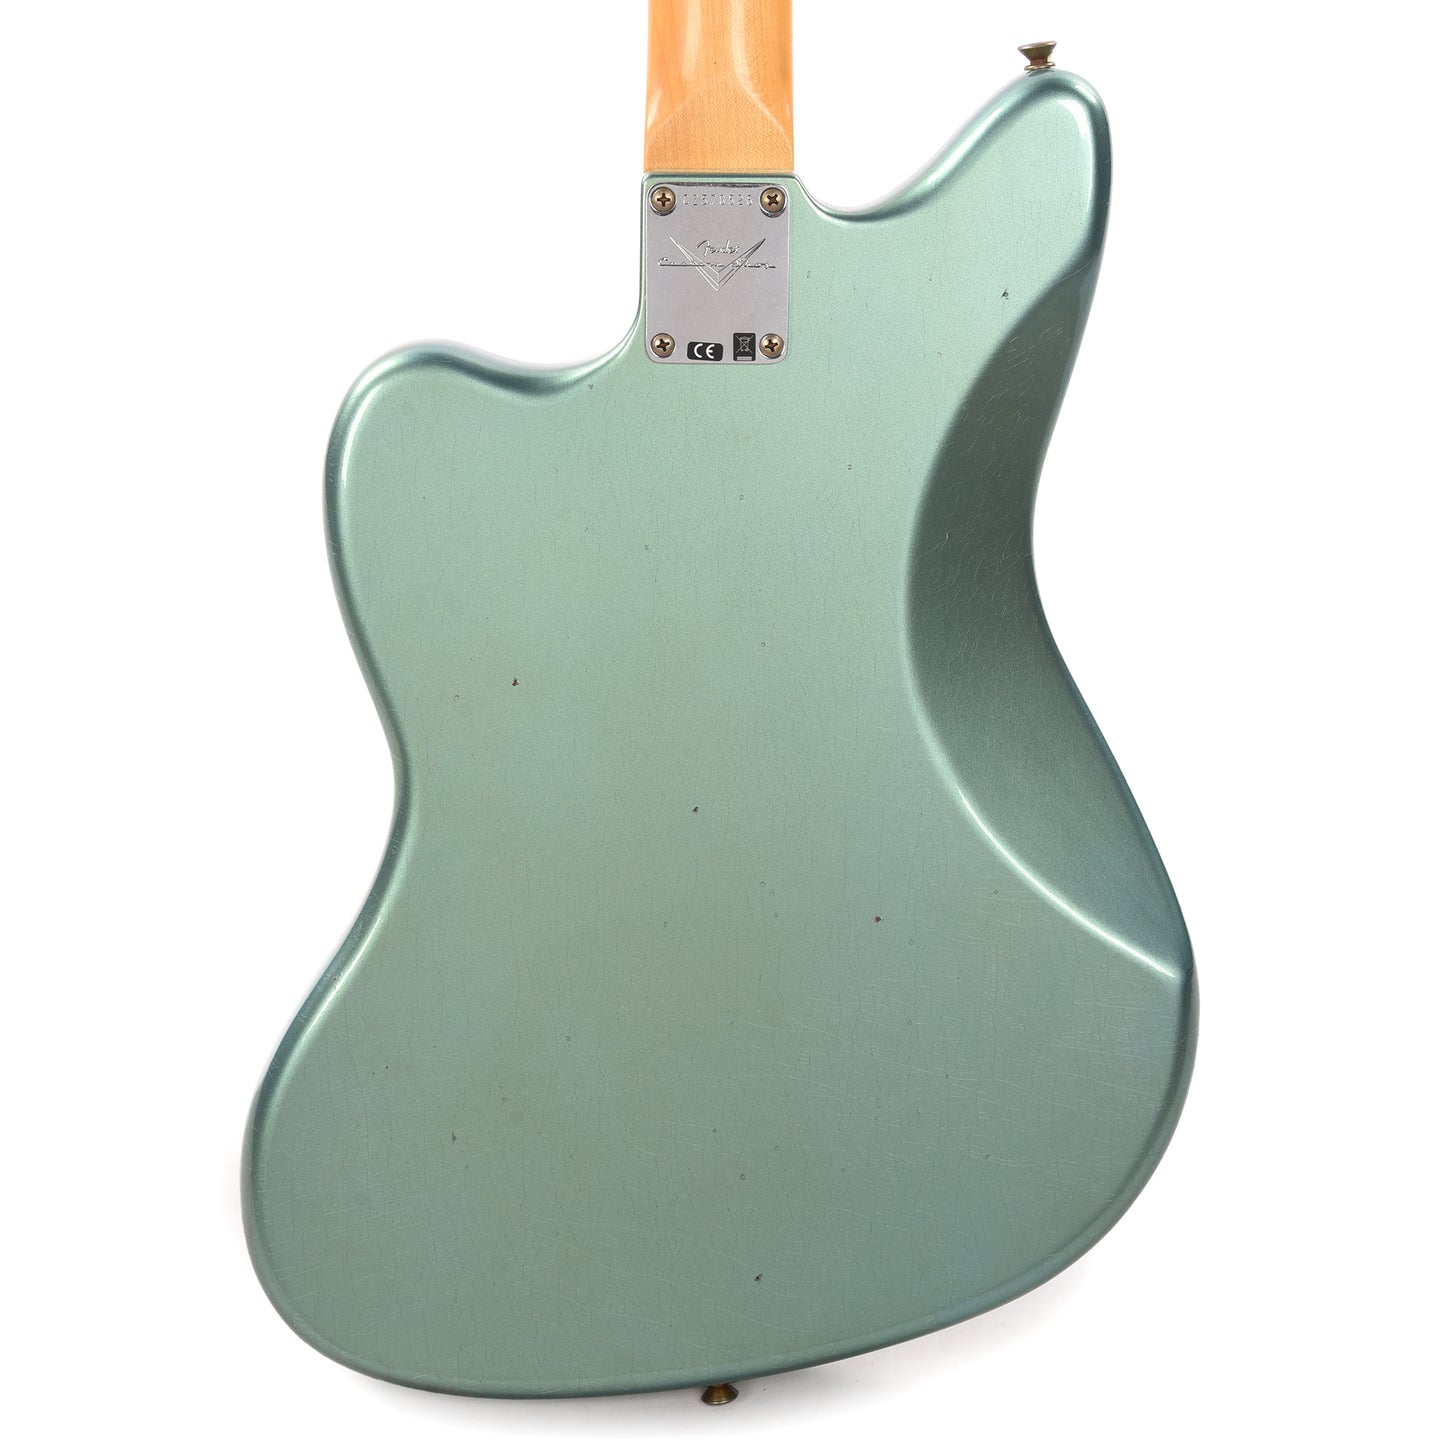 Fender Custom Shop 1966 Jazzmaster "Chicago Special" Journeyman Relic Super Aged Teal Green Metallic w/Matching Headcap